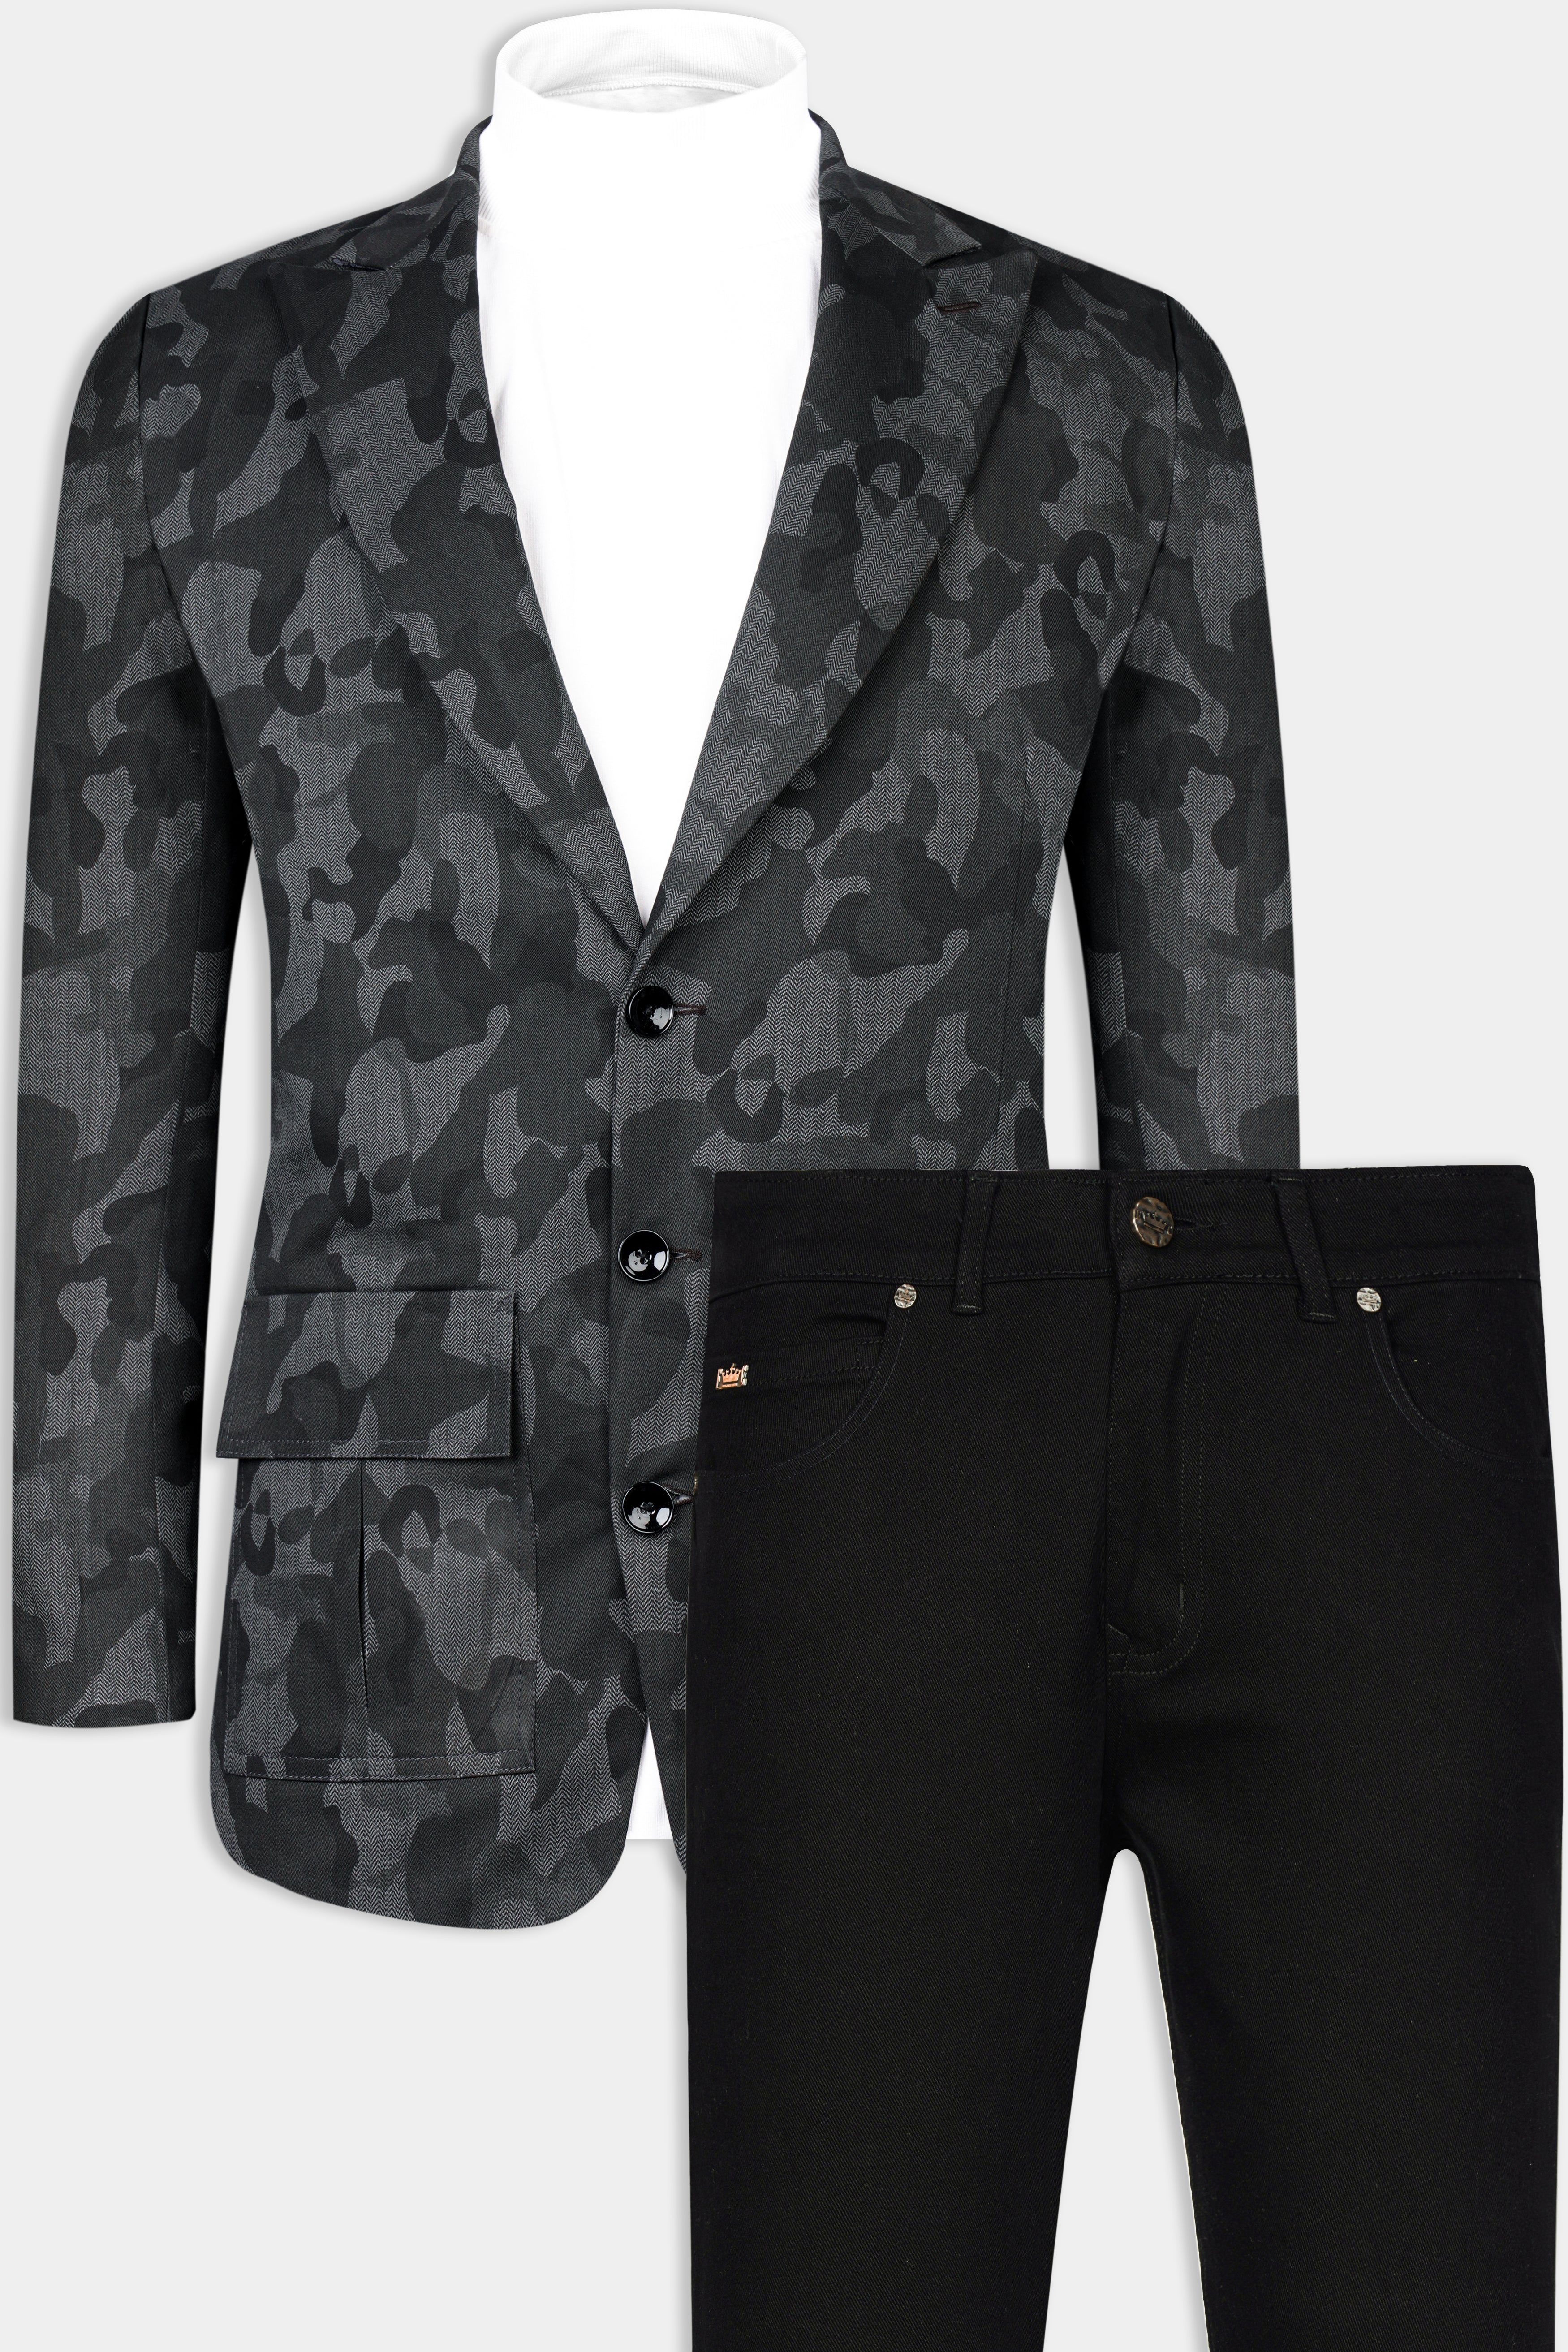 Merengo Gray and Baltic Sea Black Premium Cotton Blazer With Jade Black jeans